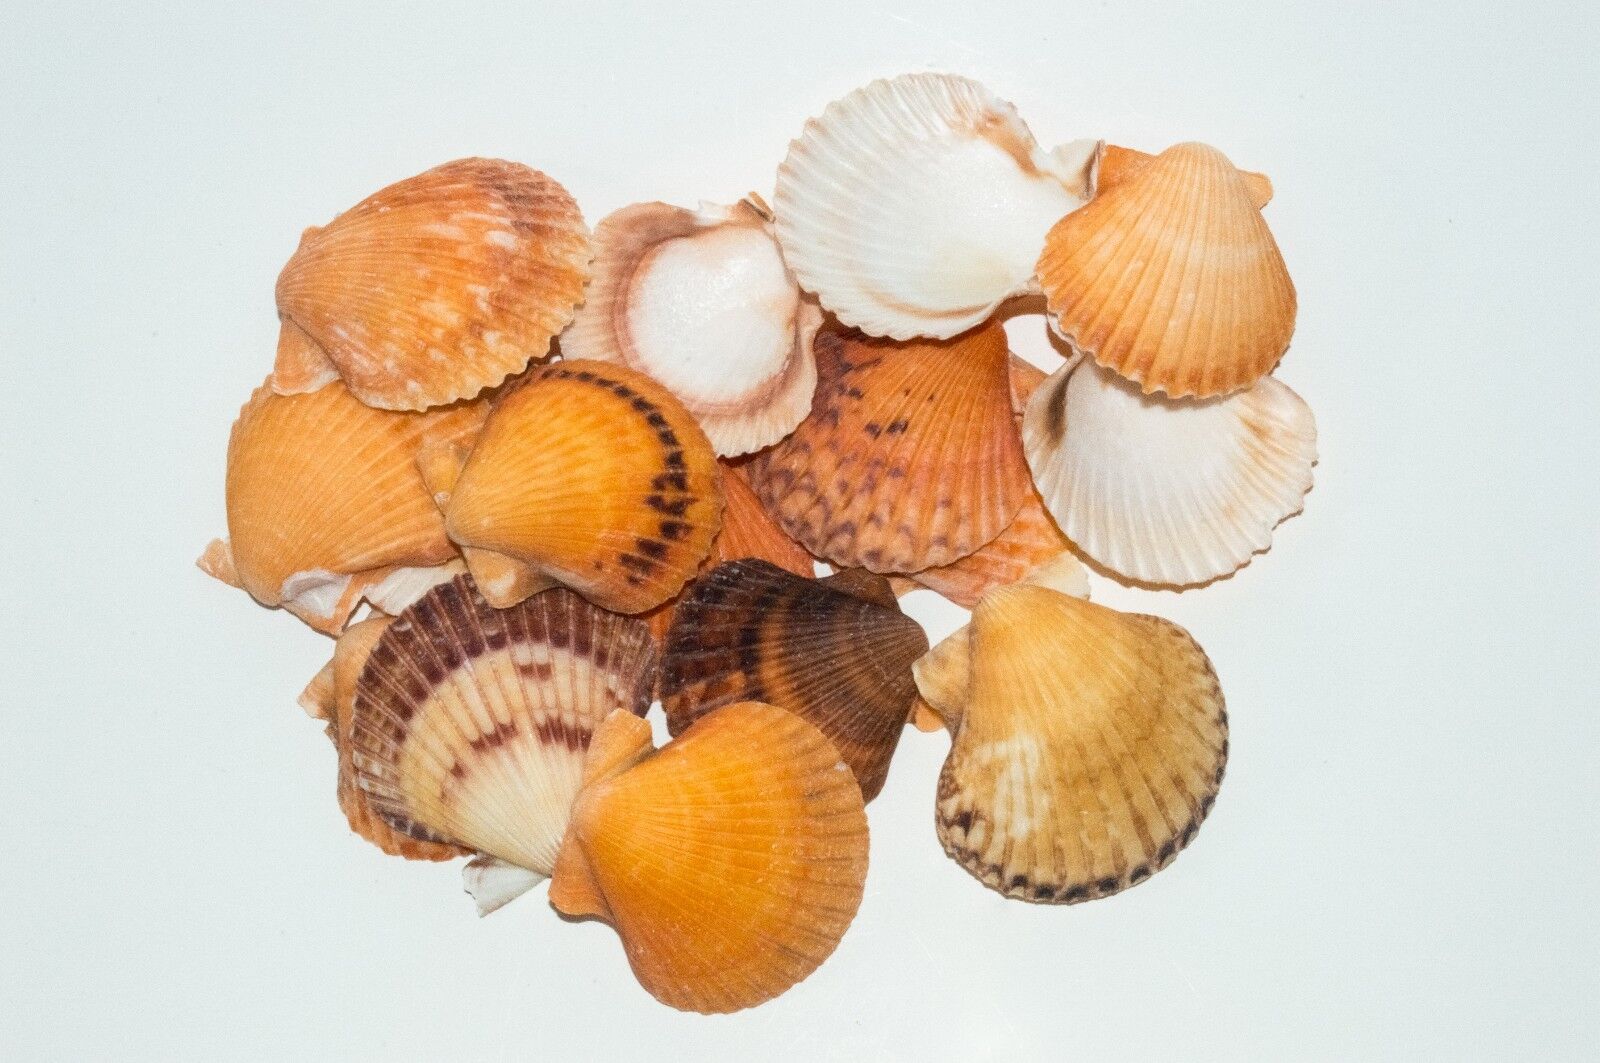 NessaStores Orange Pecten Sea Shell Beach Craft Scallop 2